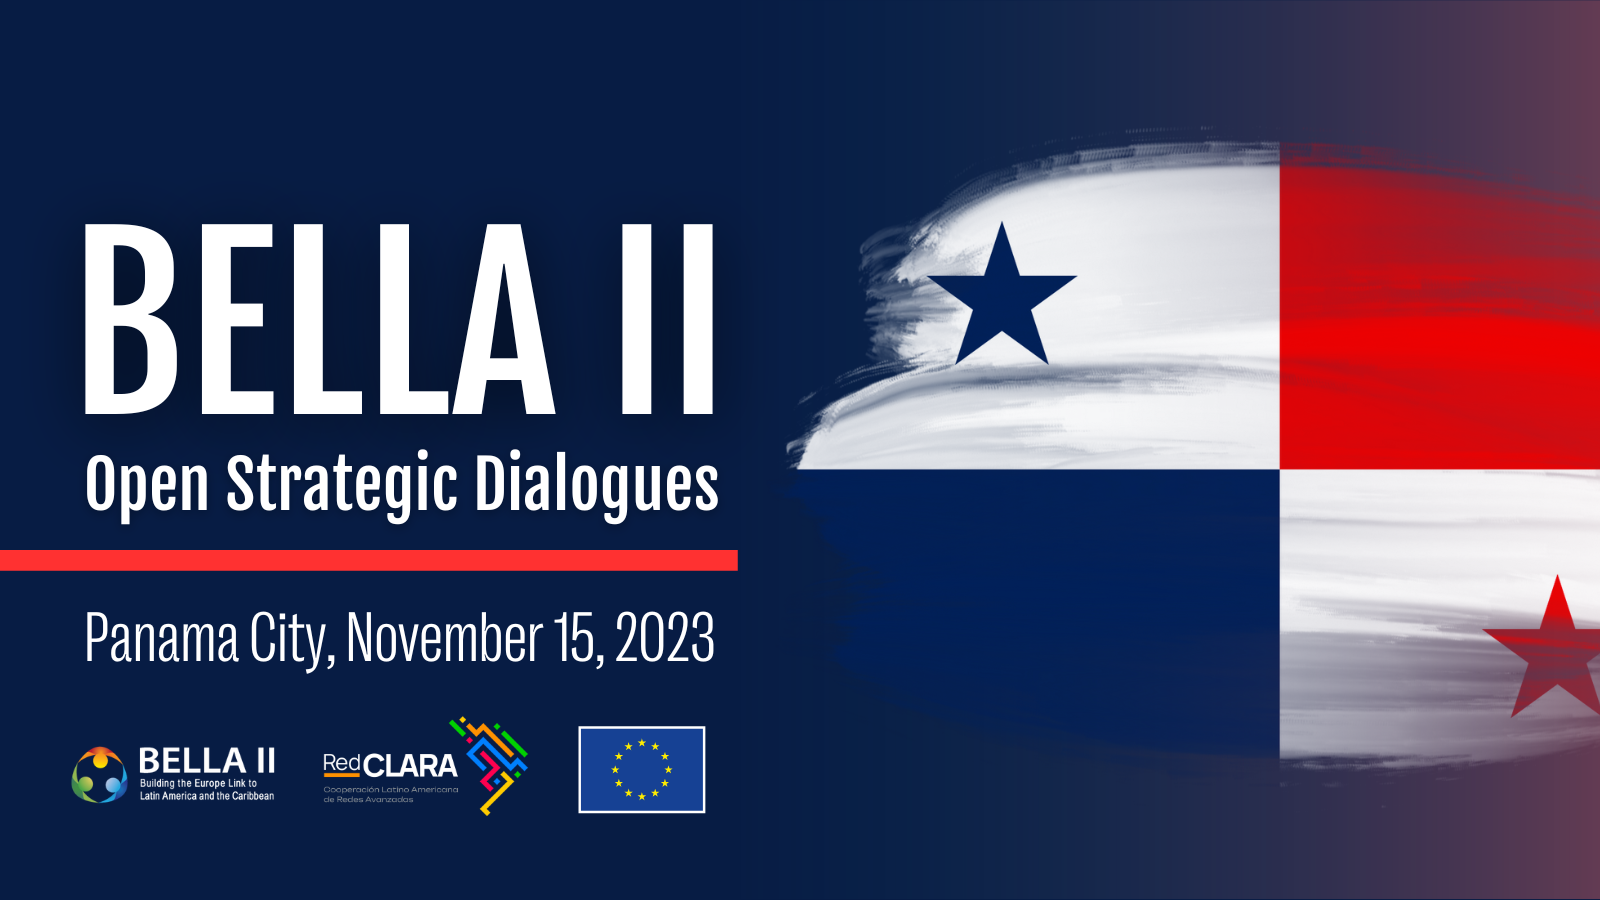 Panama: Next Venue for BELLA II Strategic Dialogues